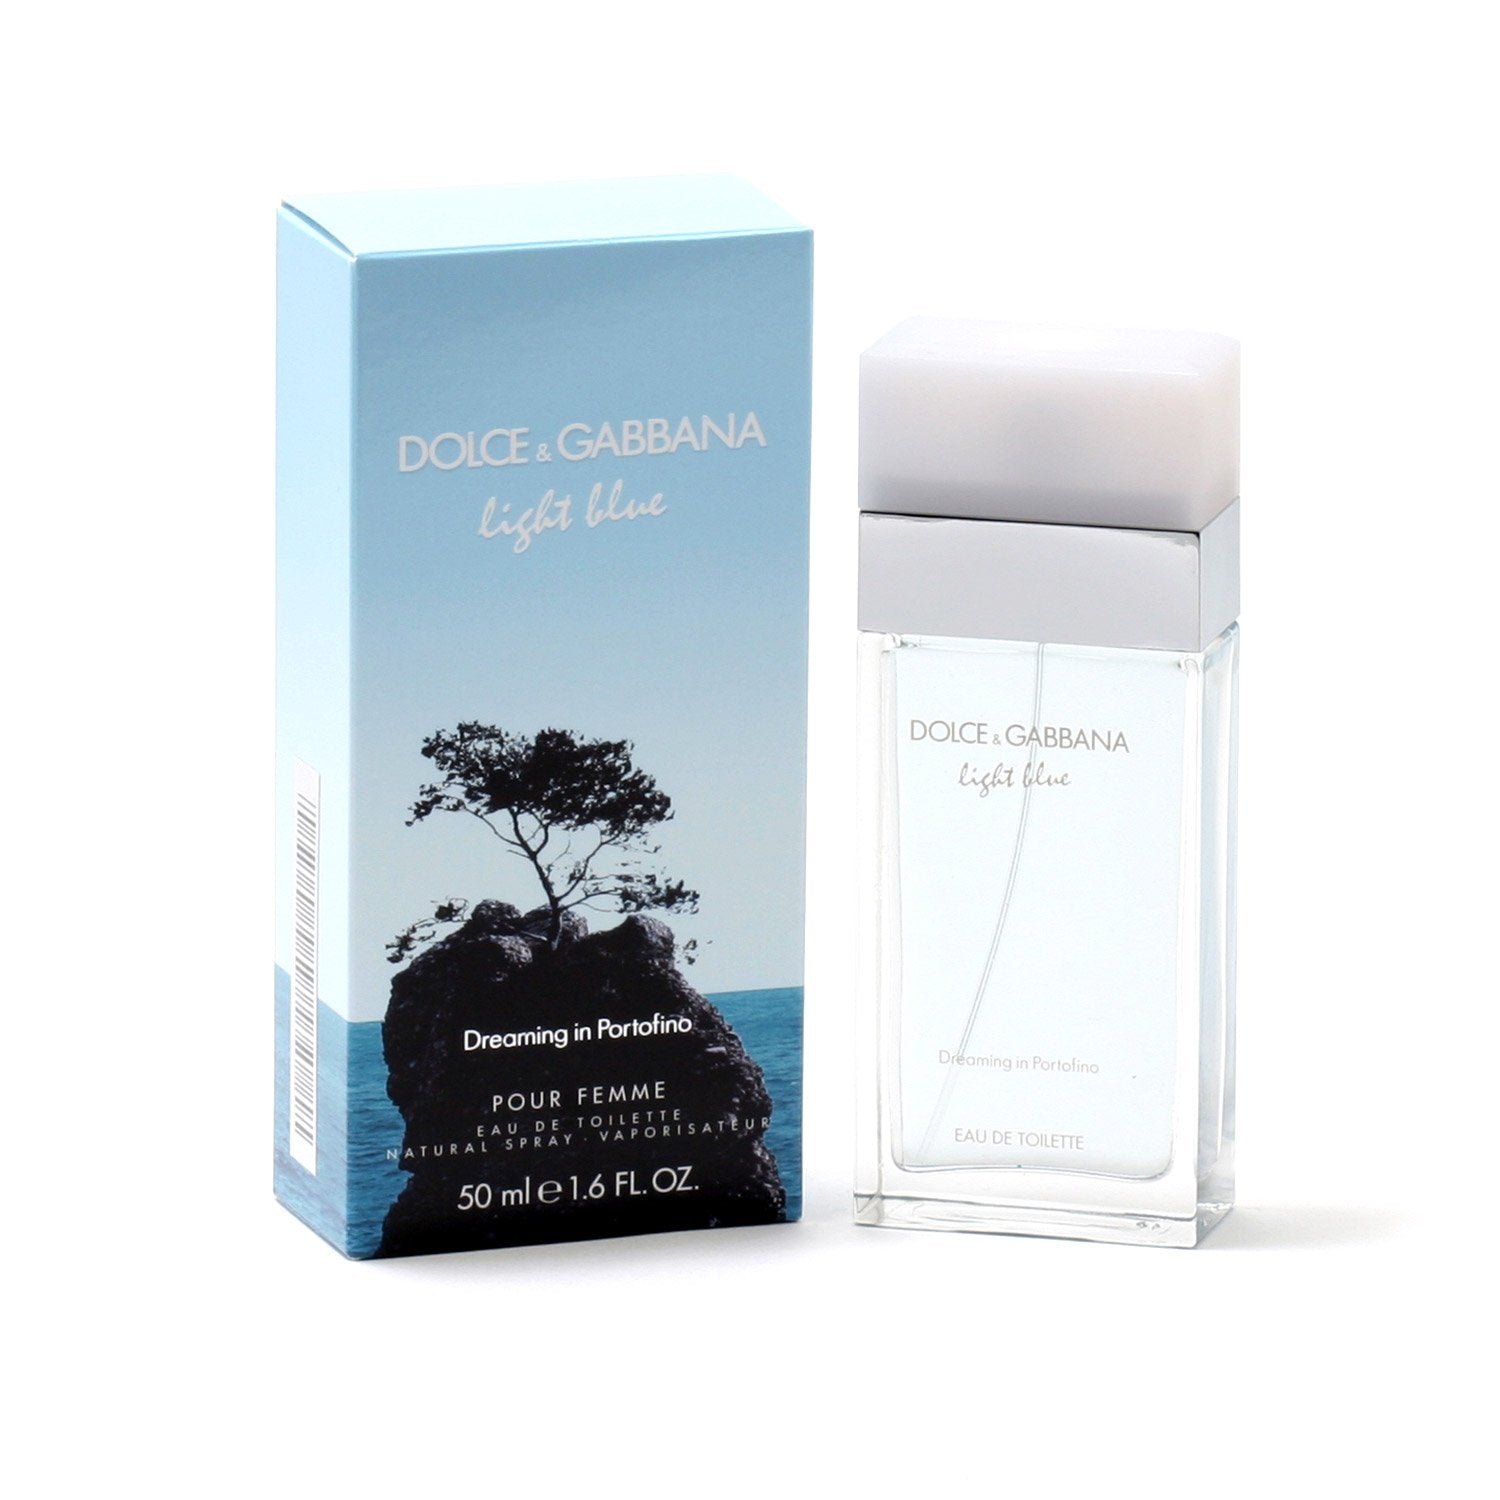 Perfume - DOLCE & GABBANA LIGHT BLUE DREAMING IN PORTOFINO FOR WOMEN - EAU DE TOILETTE SPRAY